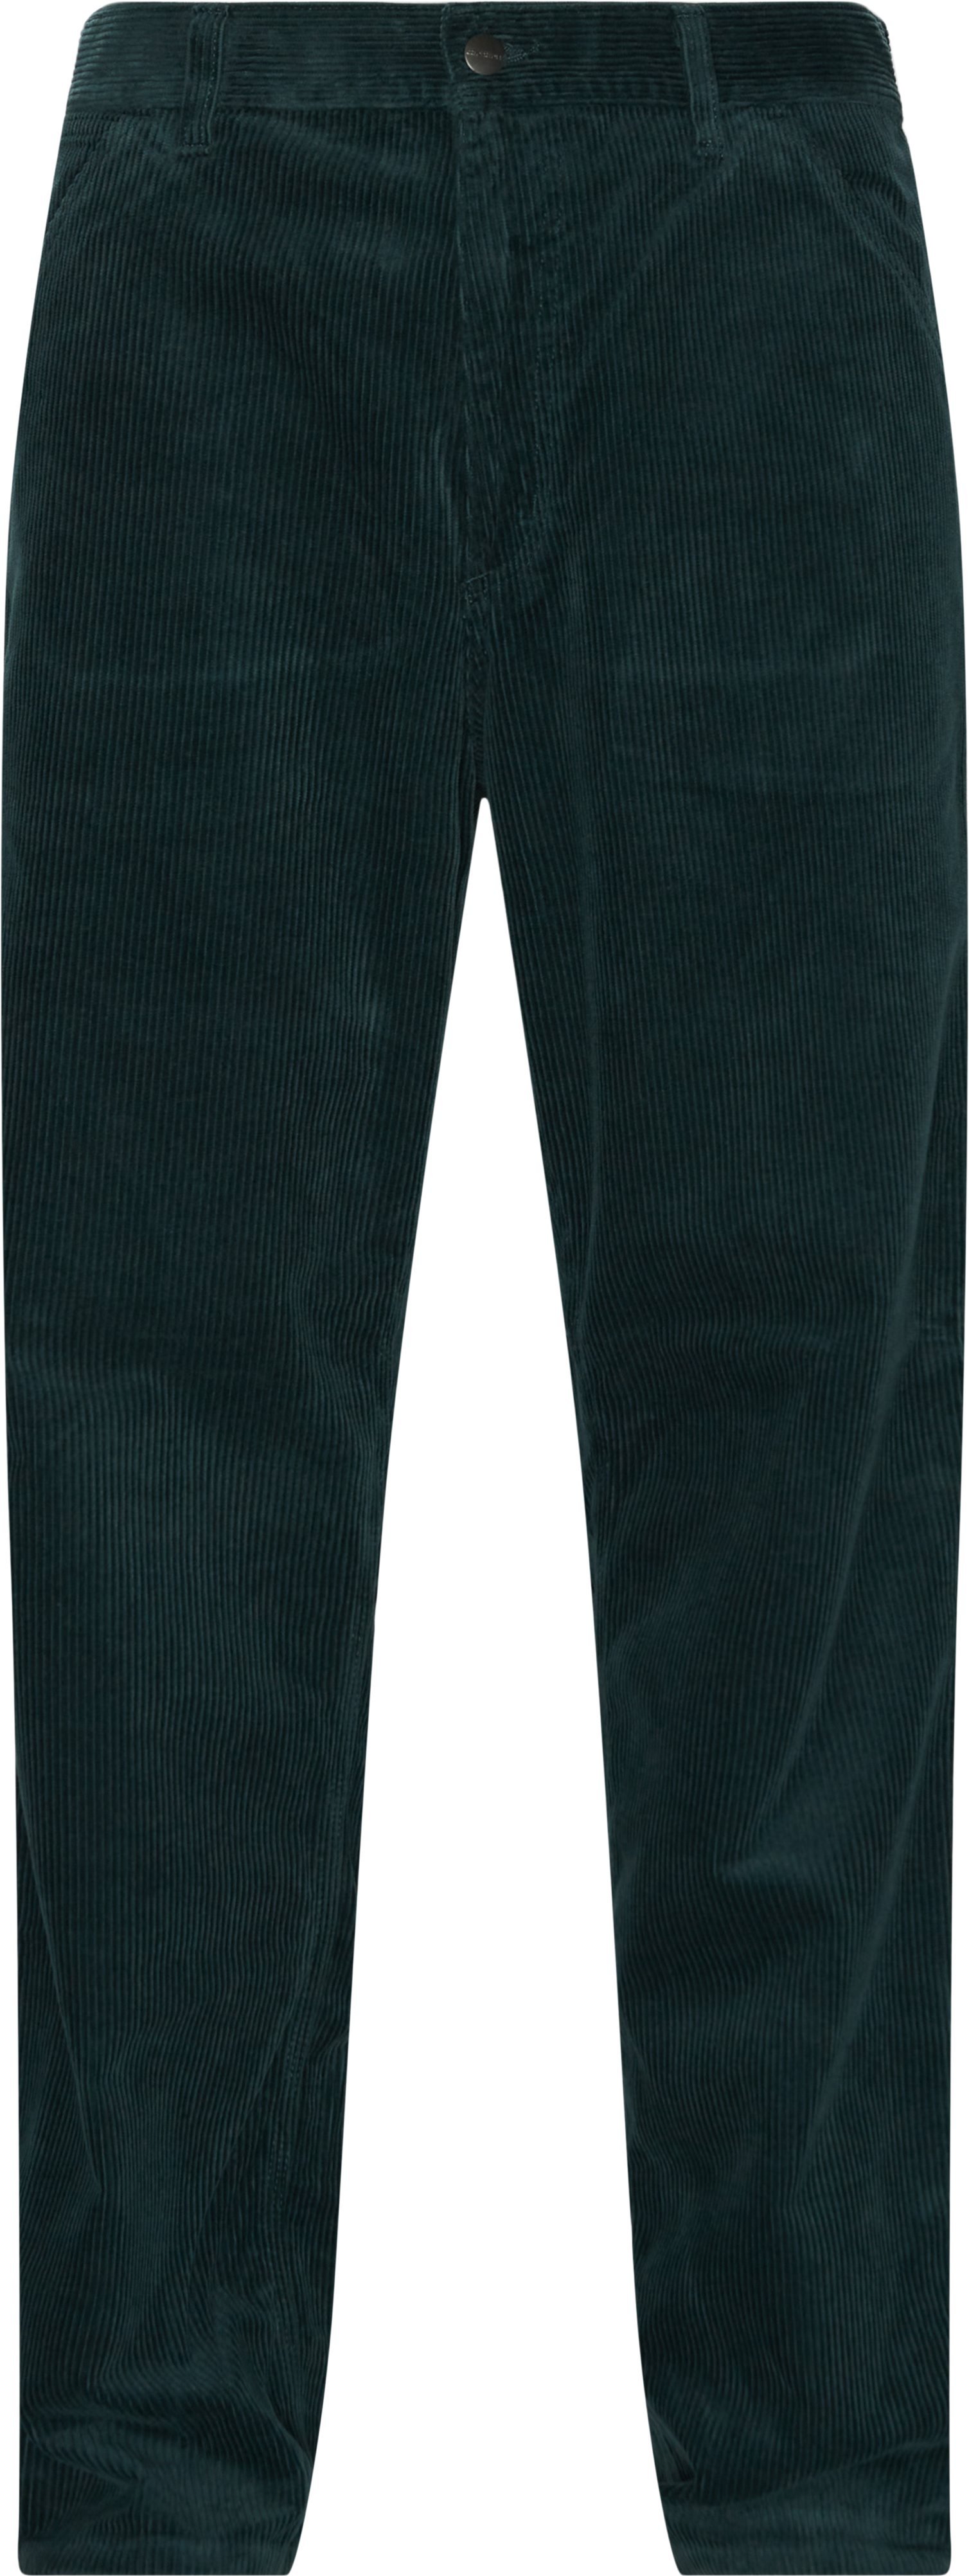 Simple Pant Jeans - Bukser - Straight fit - Grøn